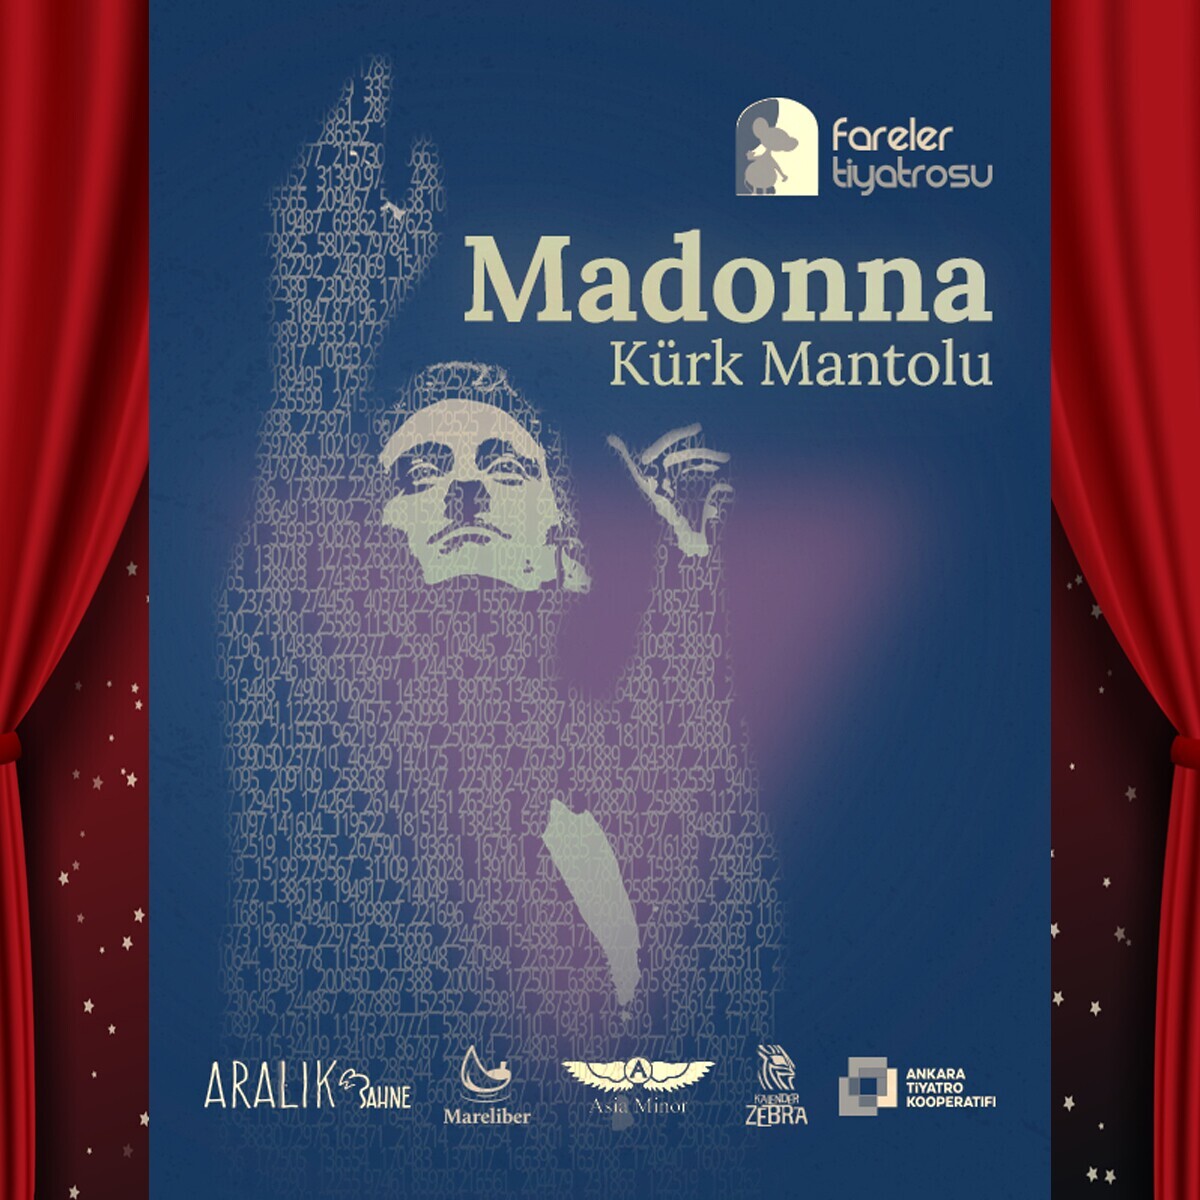 'Madonna Kürk Mantolu' Tiyatro Bileti